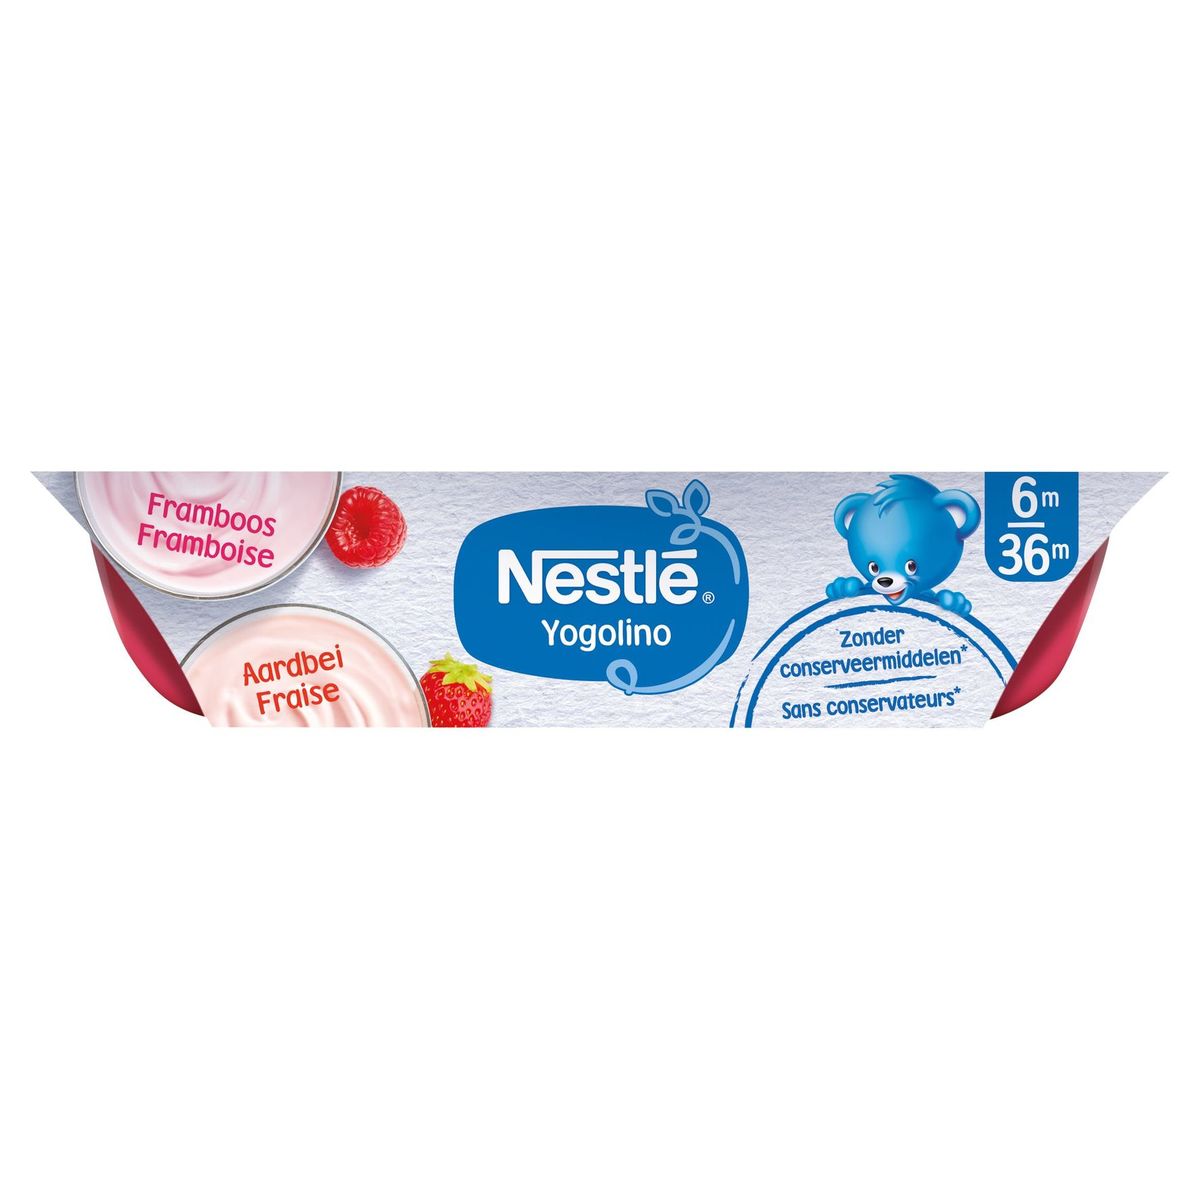 Nestlé Yogolino Laitage Framboise Fraise dès 6 mois 6x60g